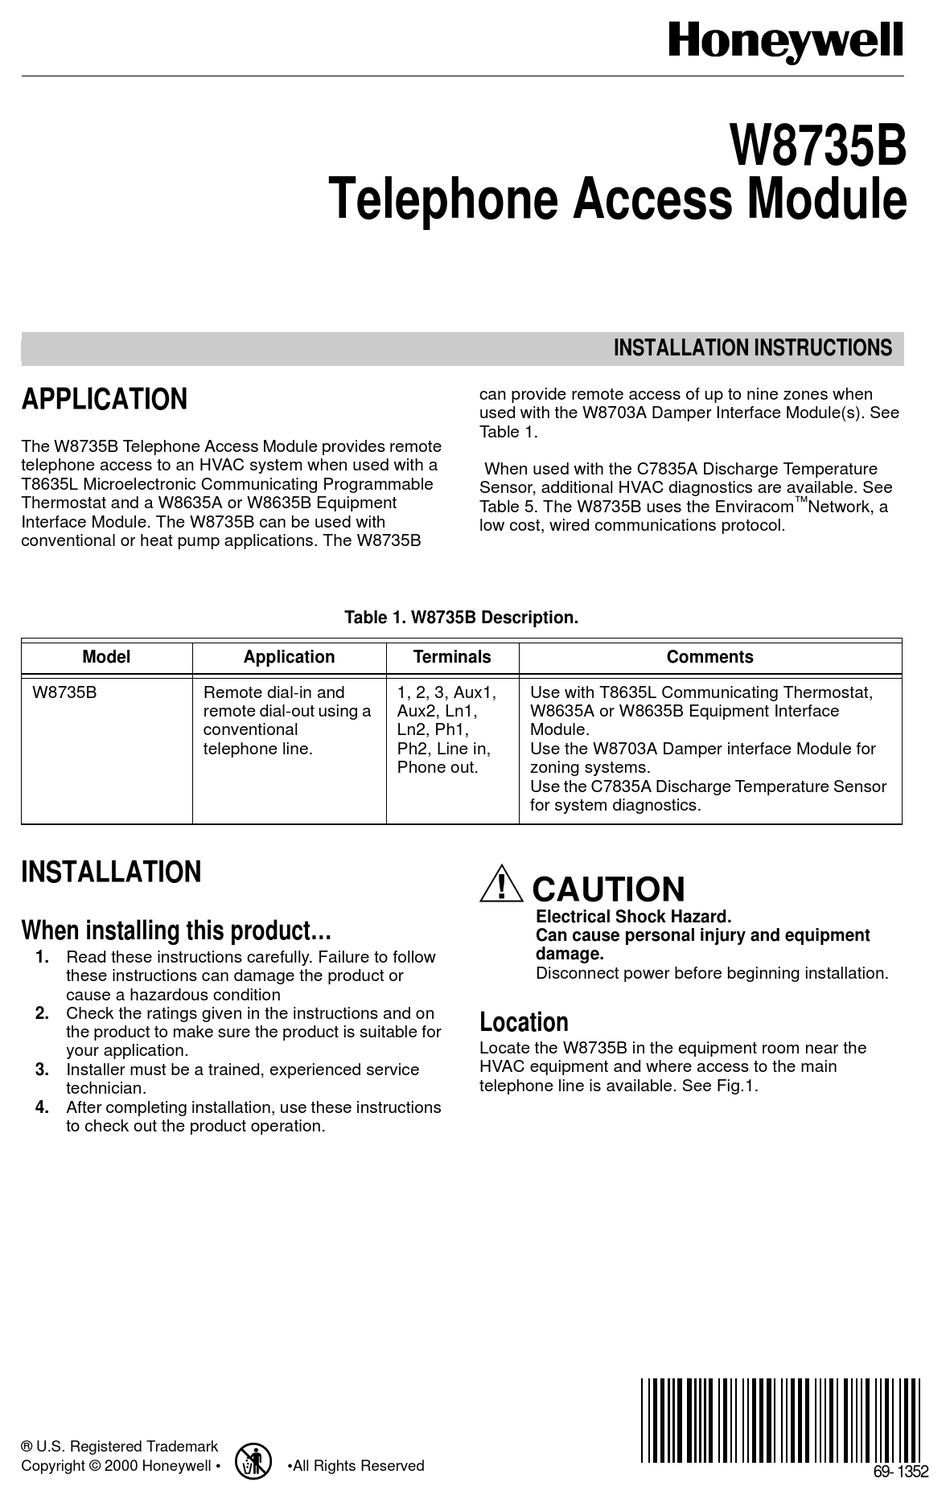 HONEYWELL W8735B INSTALLATION INSTRUCTIONS MANUAL Pdf Download | ManualsLib